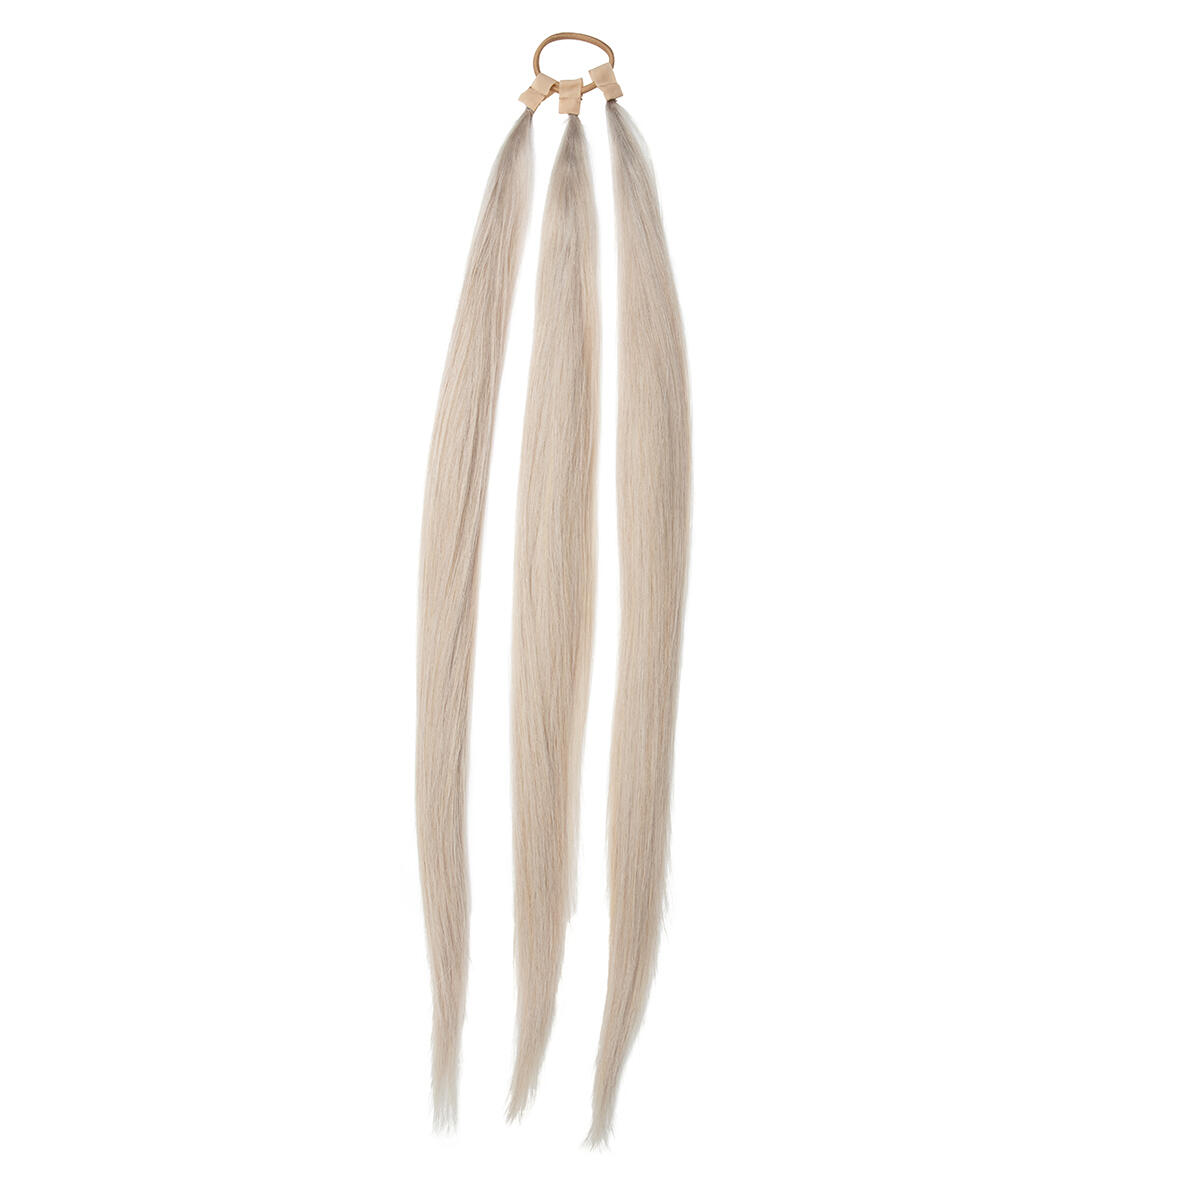 Easy Braid For voluminous braids 10.7 Light Grey 55 cm